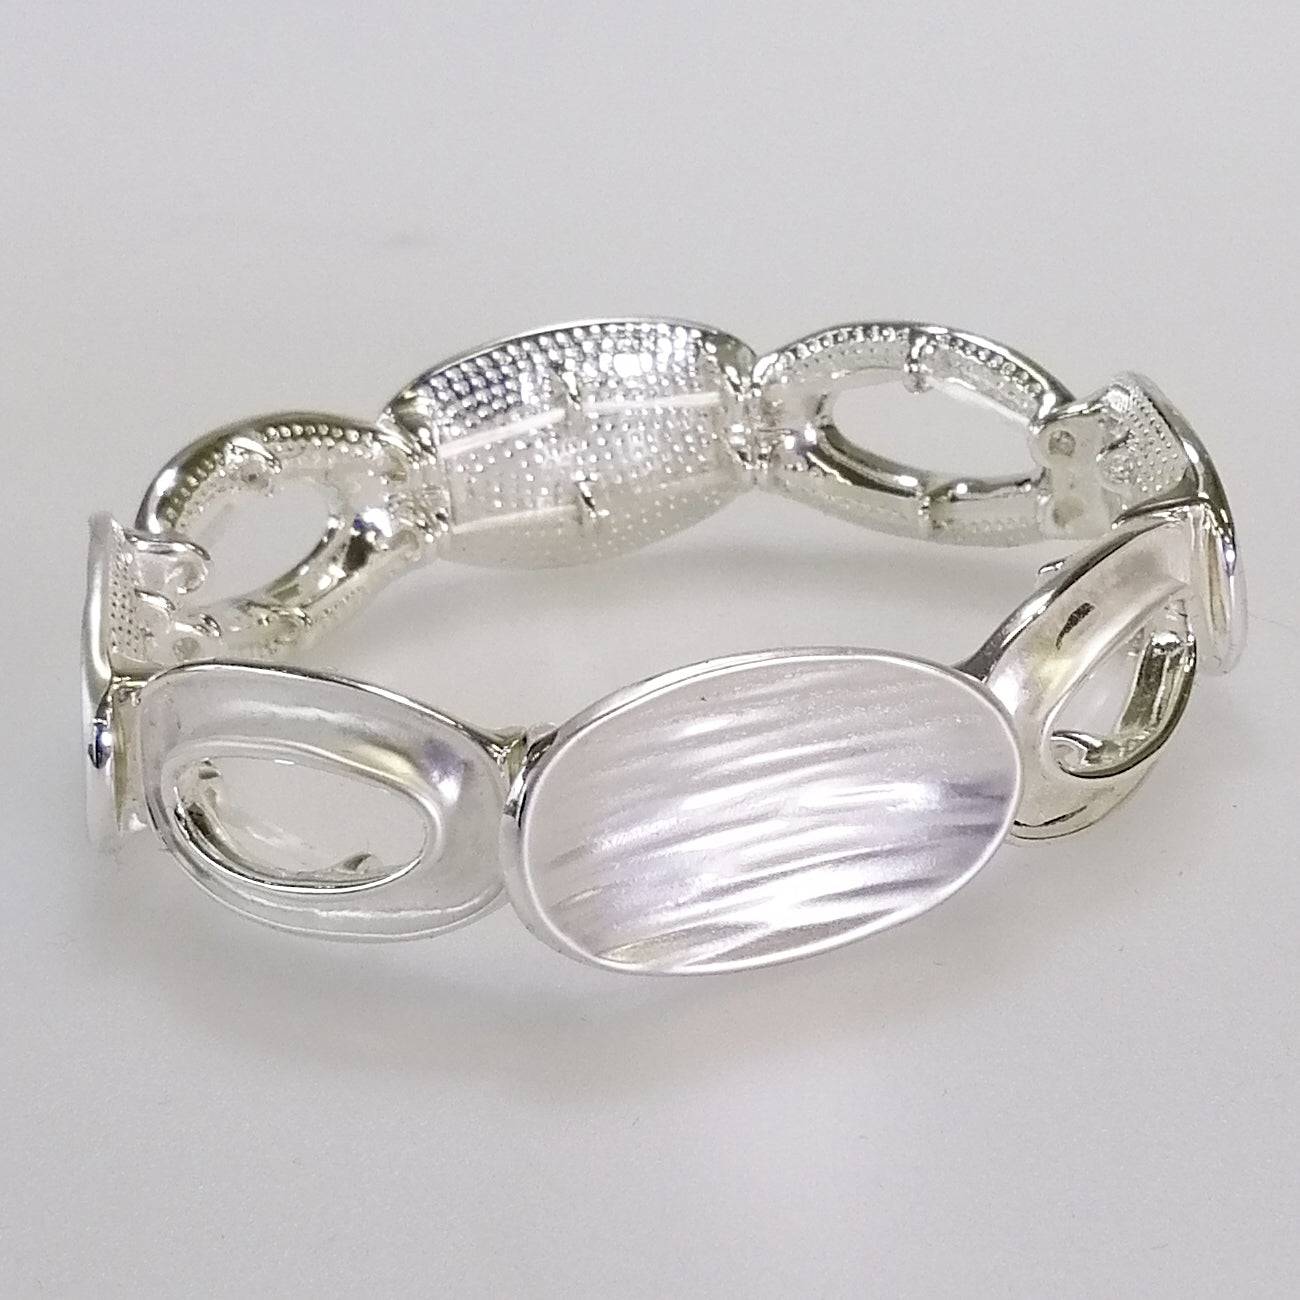 Kiwicraft - Silver-look Round Beads Bracelet